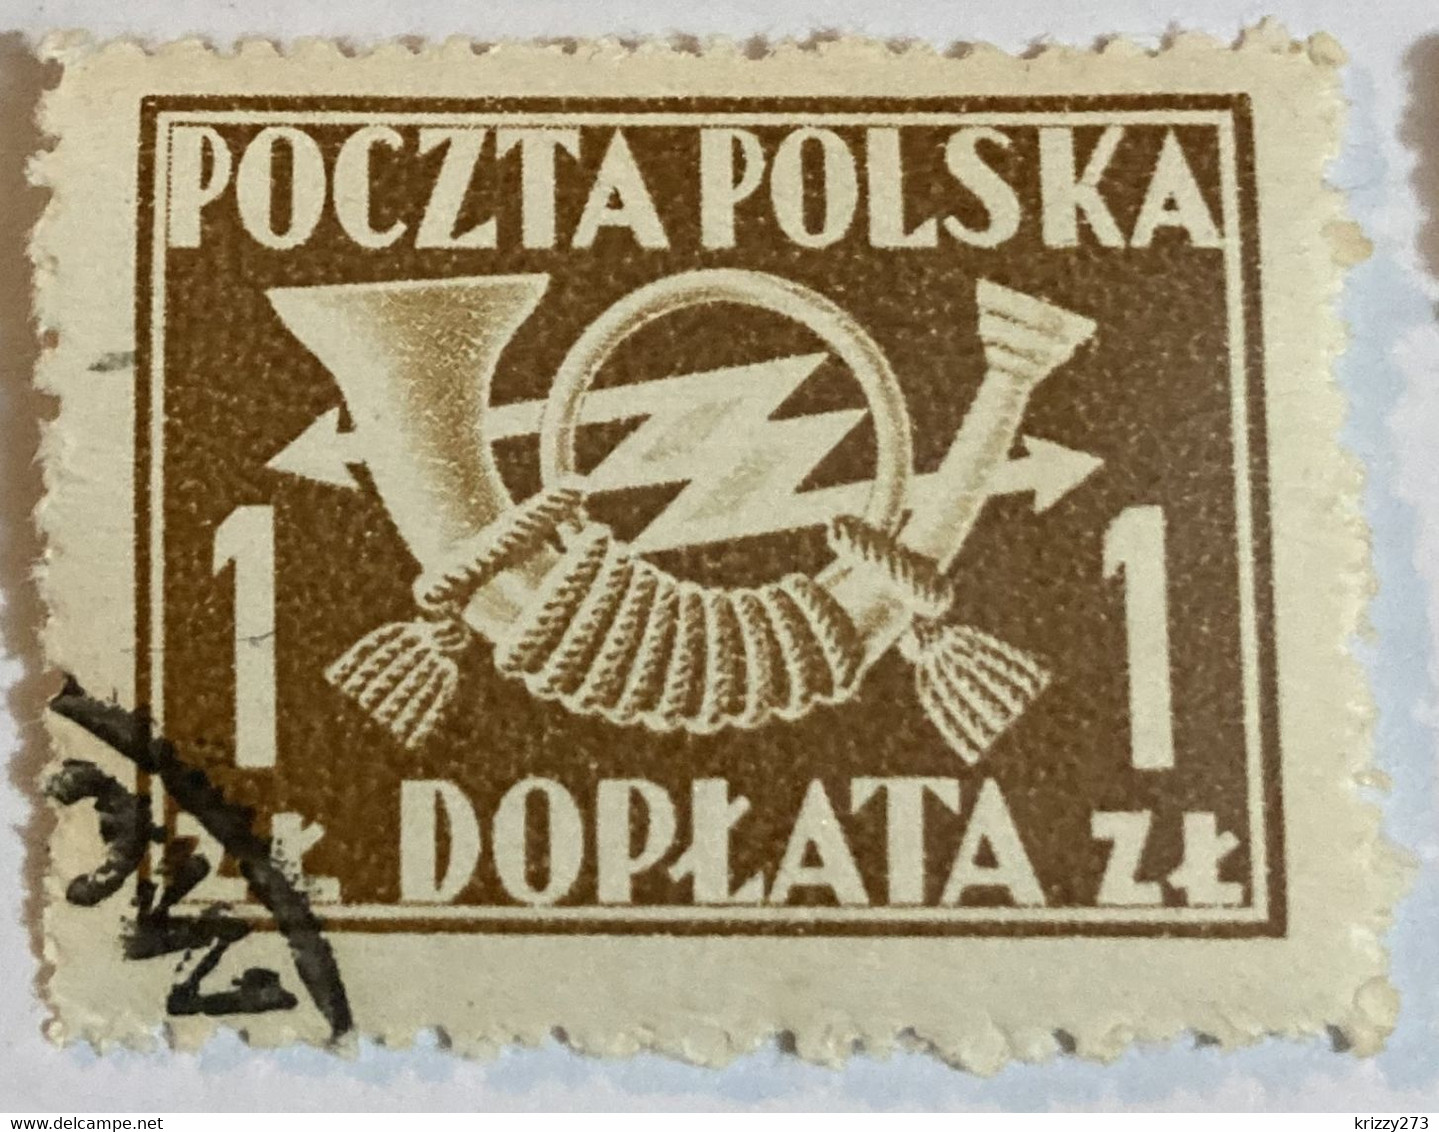 Poland 1945 Post Horn 1zl - Used - Strafport